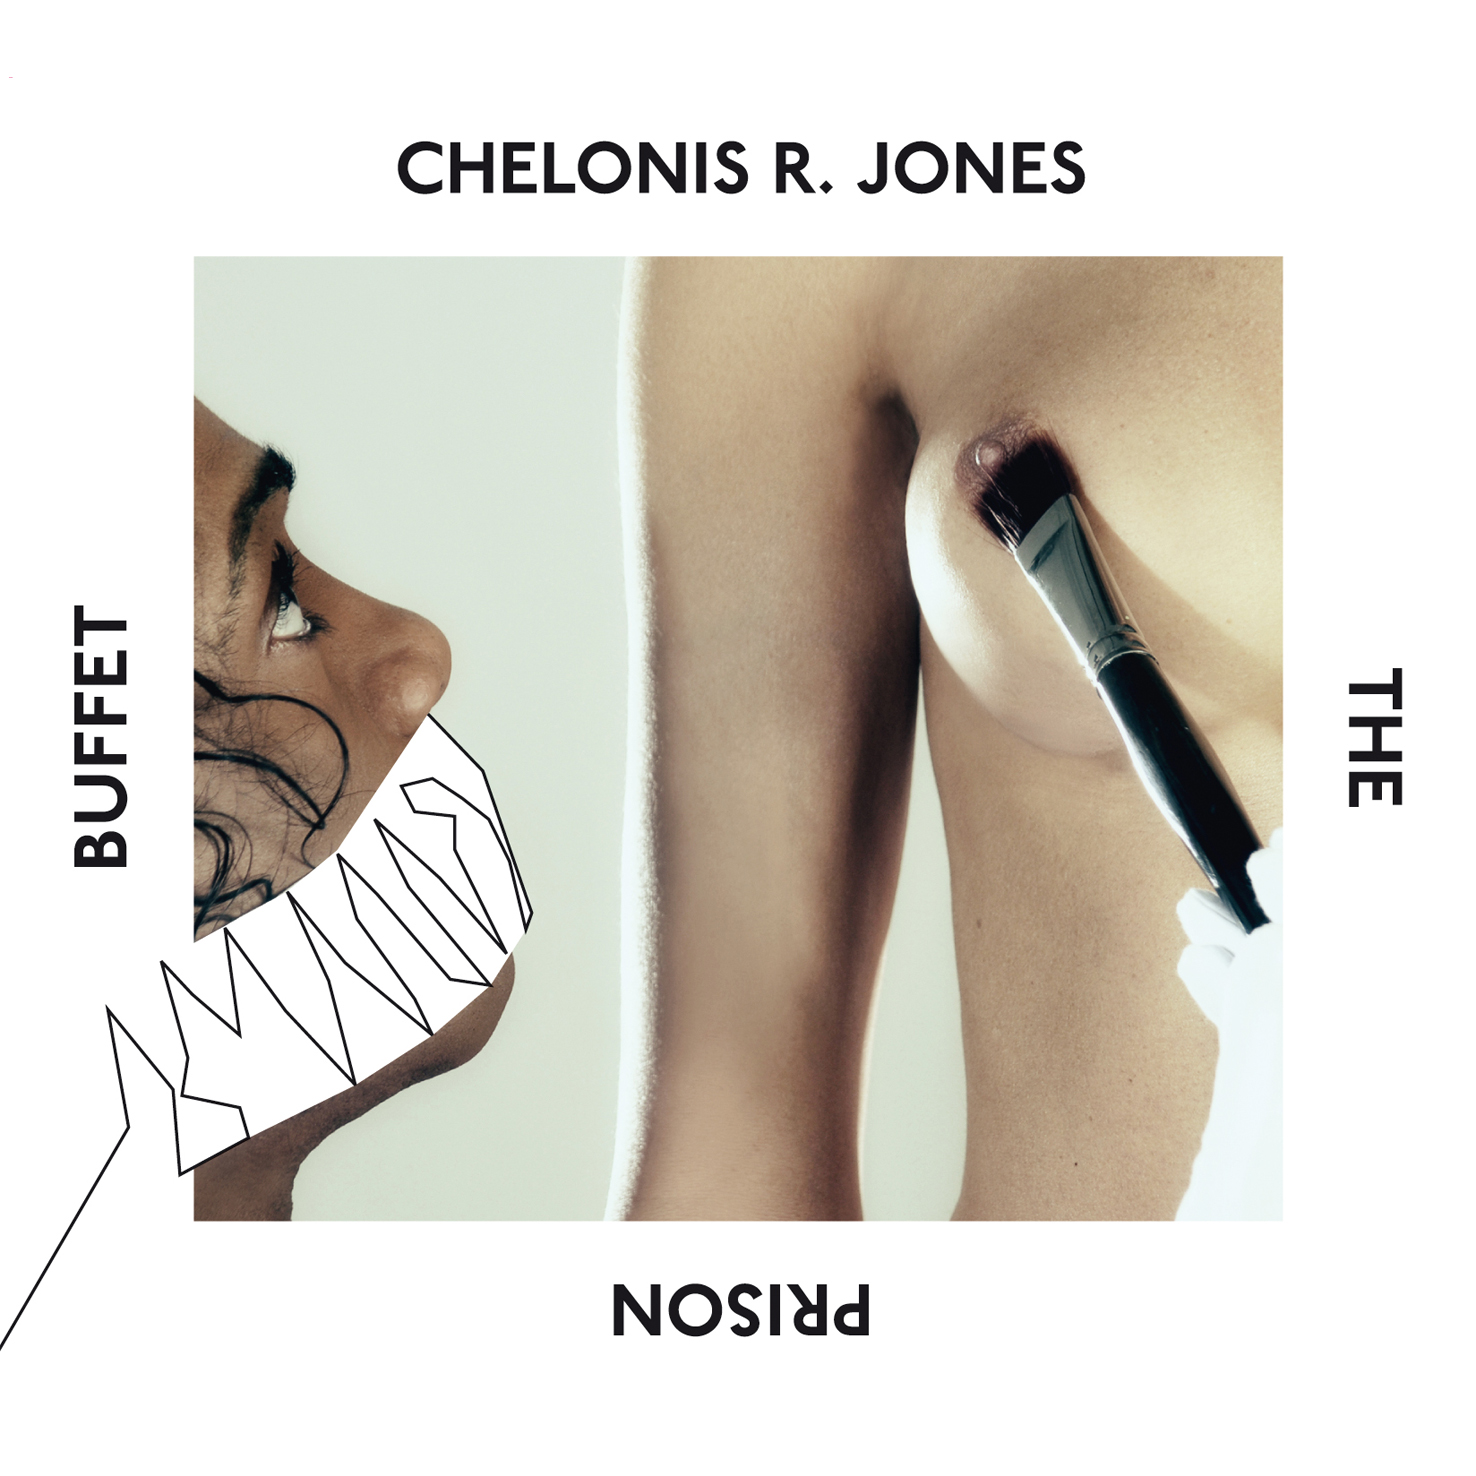 Chelonis R Jones - The prison buffet